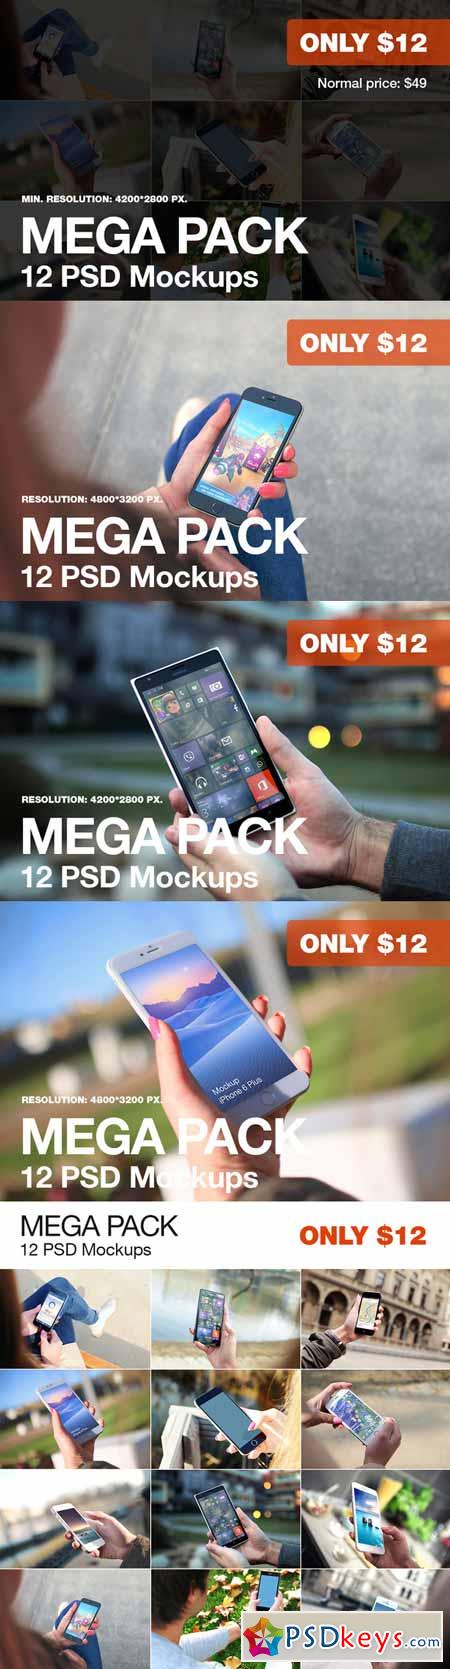 12 PSD Mockups of Mobile phones 257778